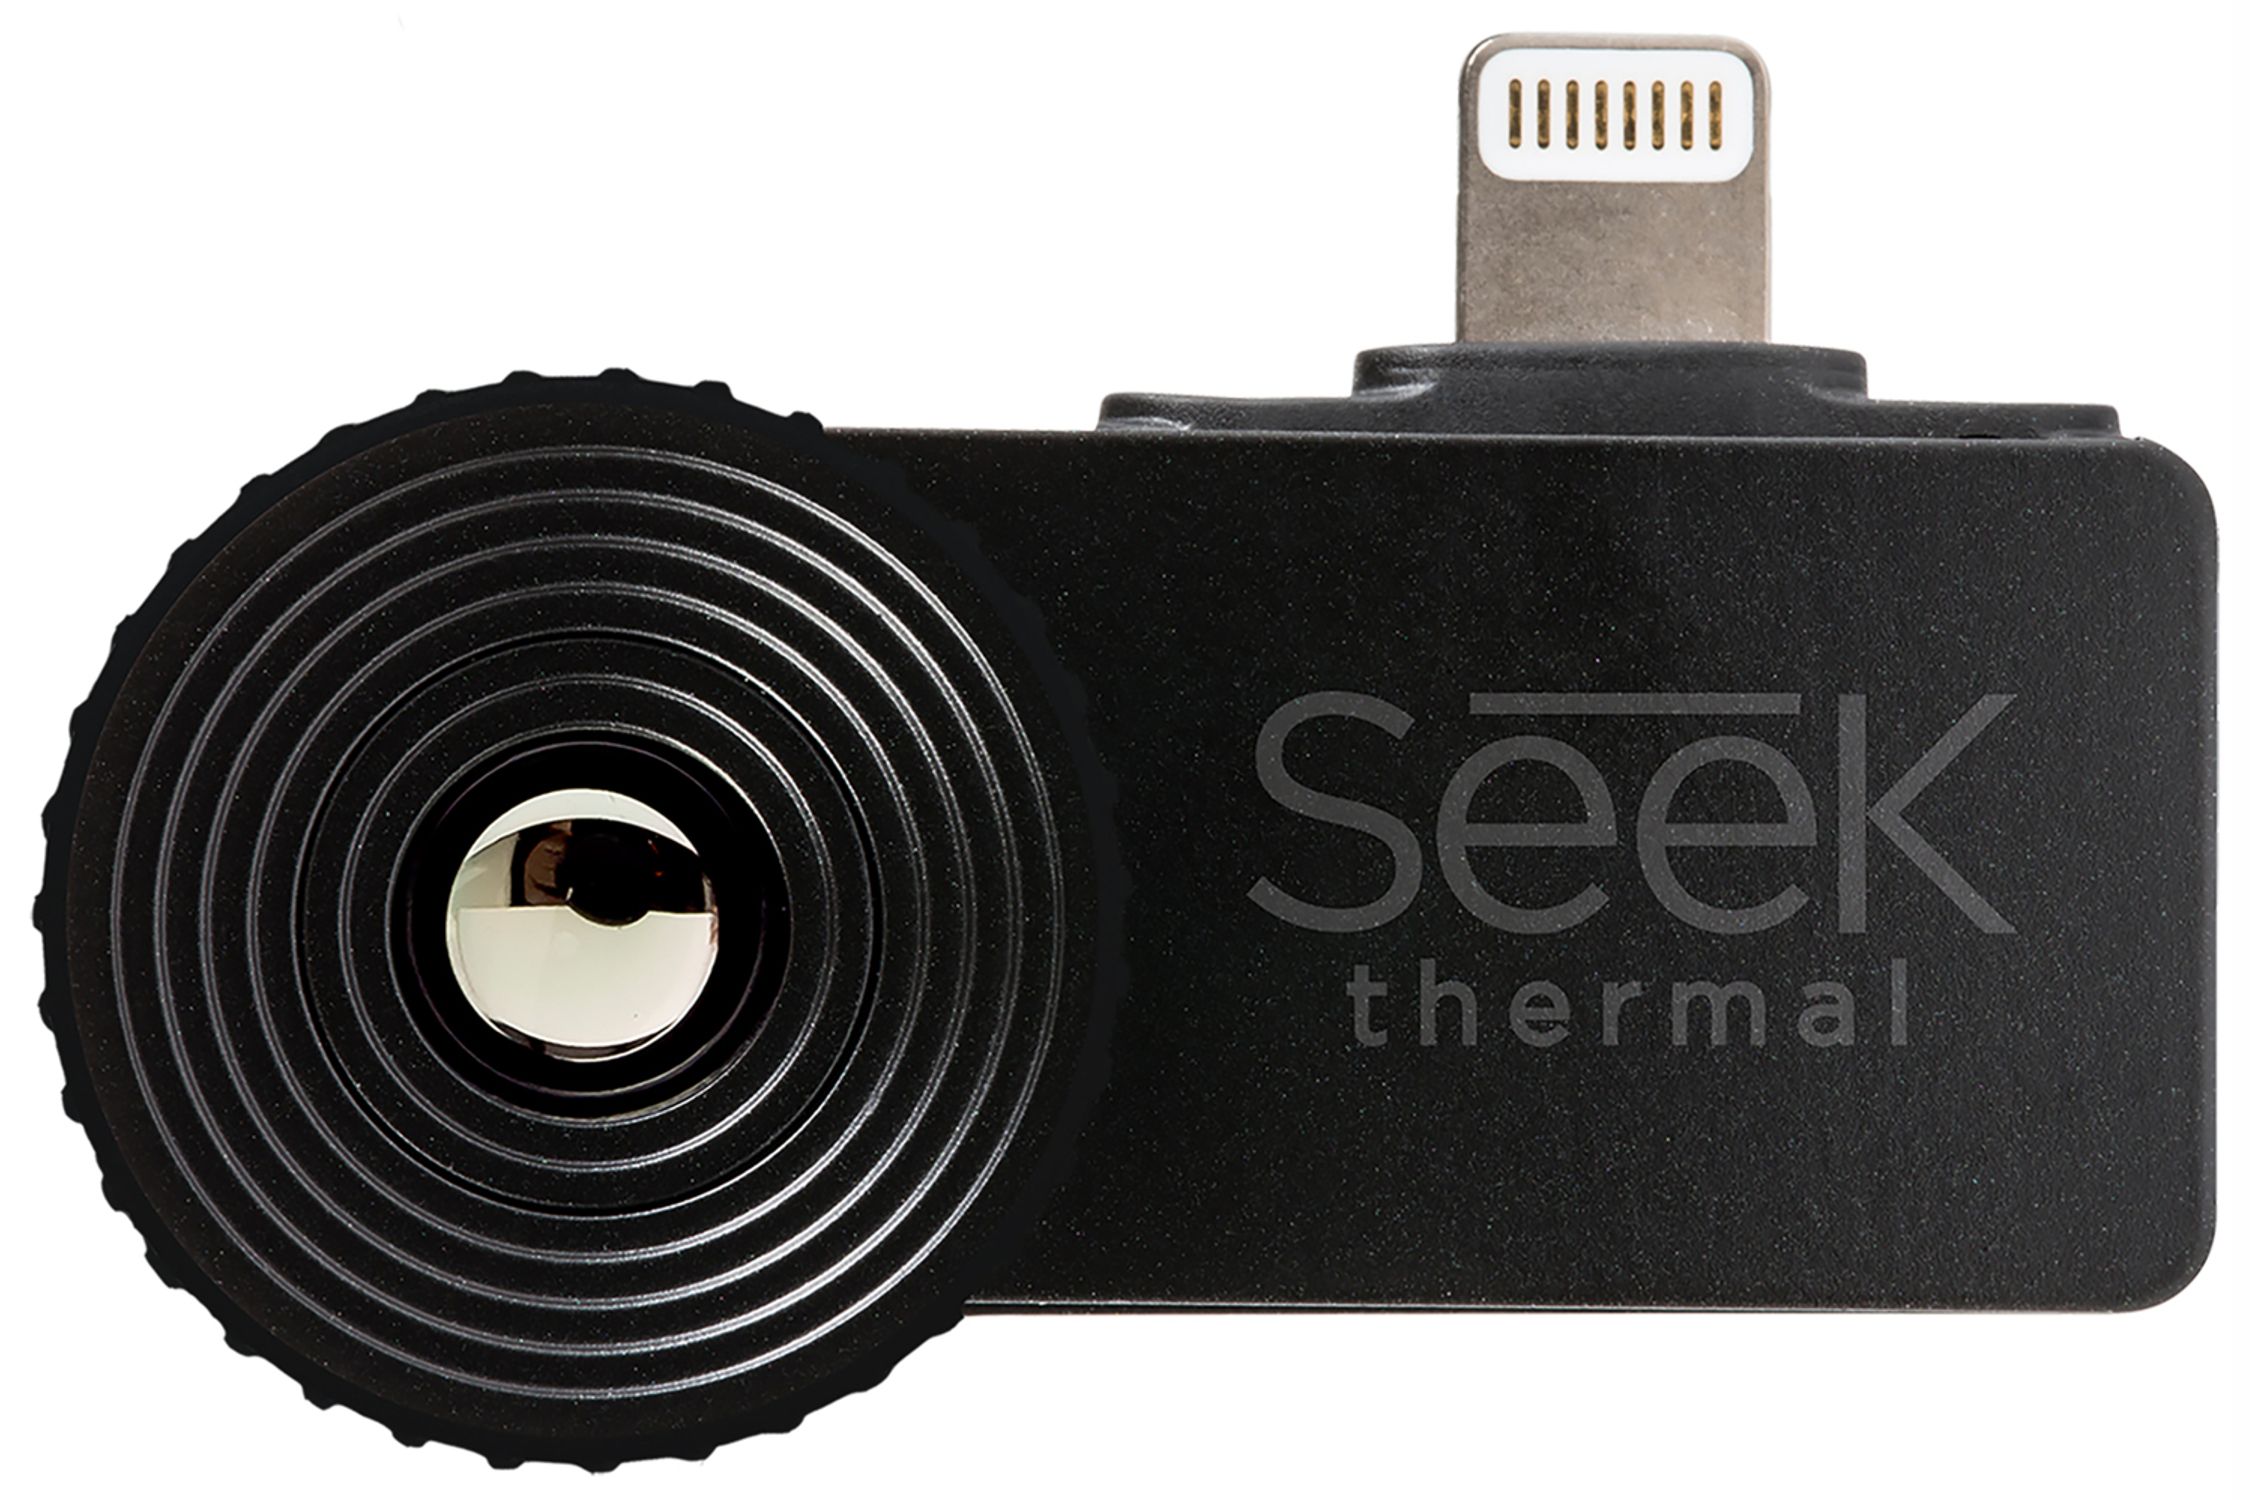 Seek Thermal Compact XR iOS Thermal imaging camera LT-EAA_1